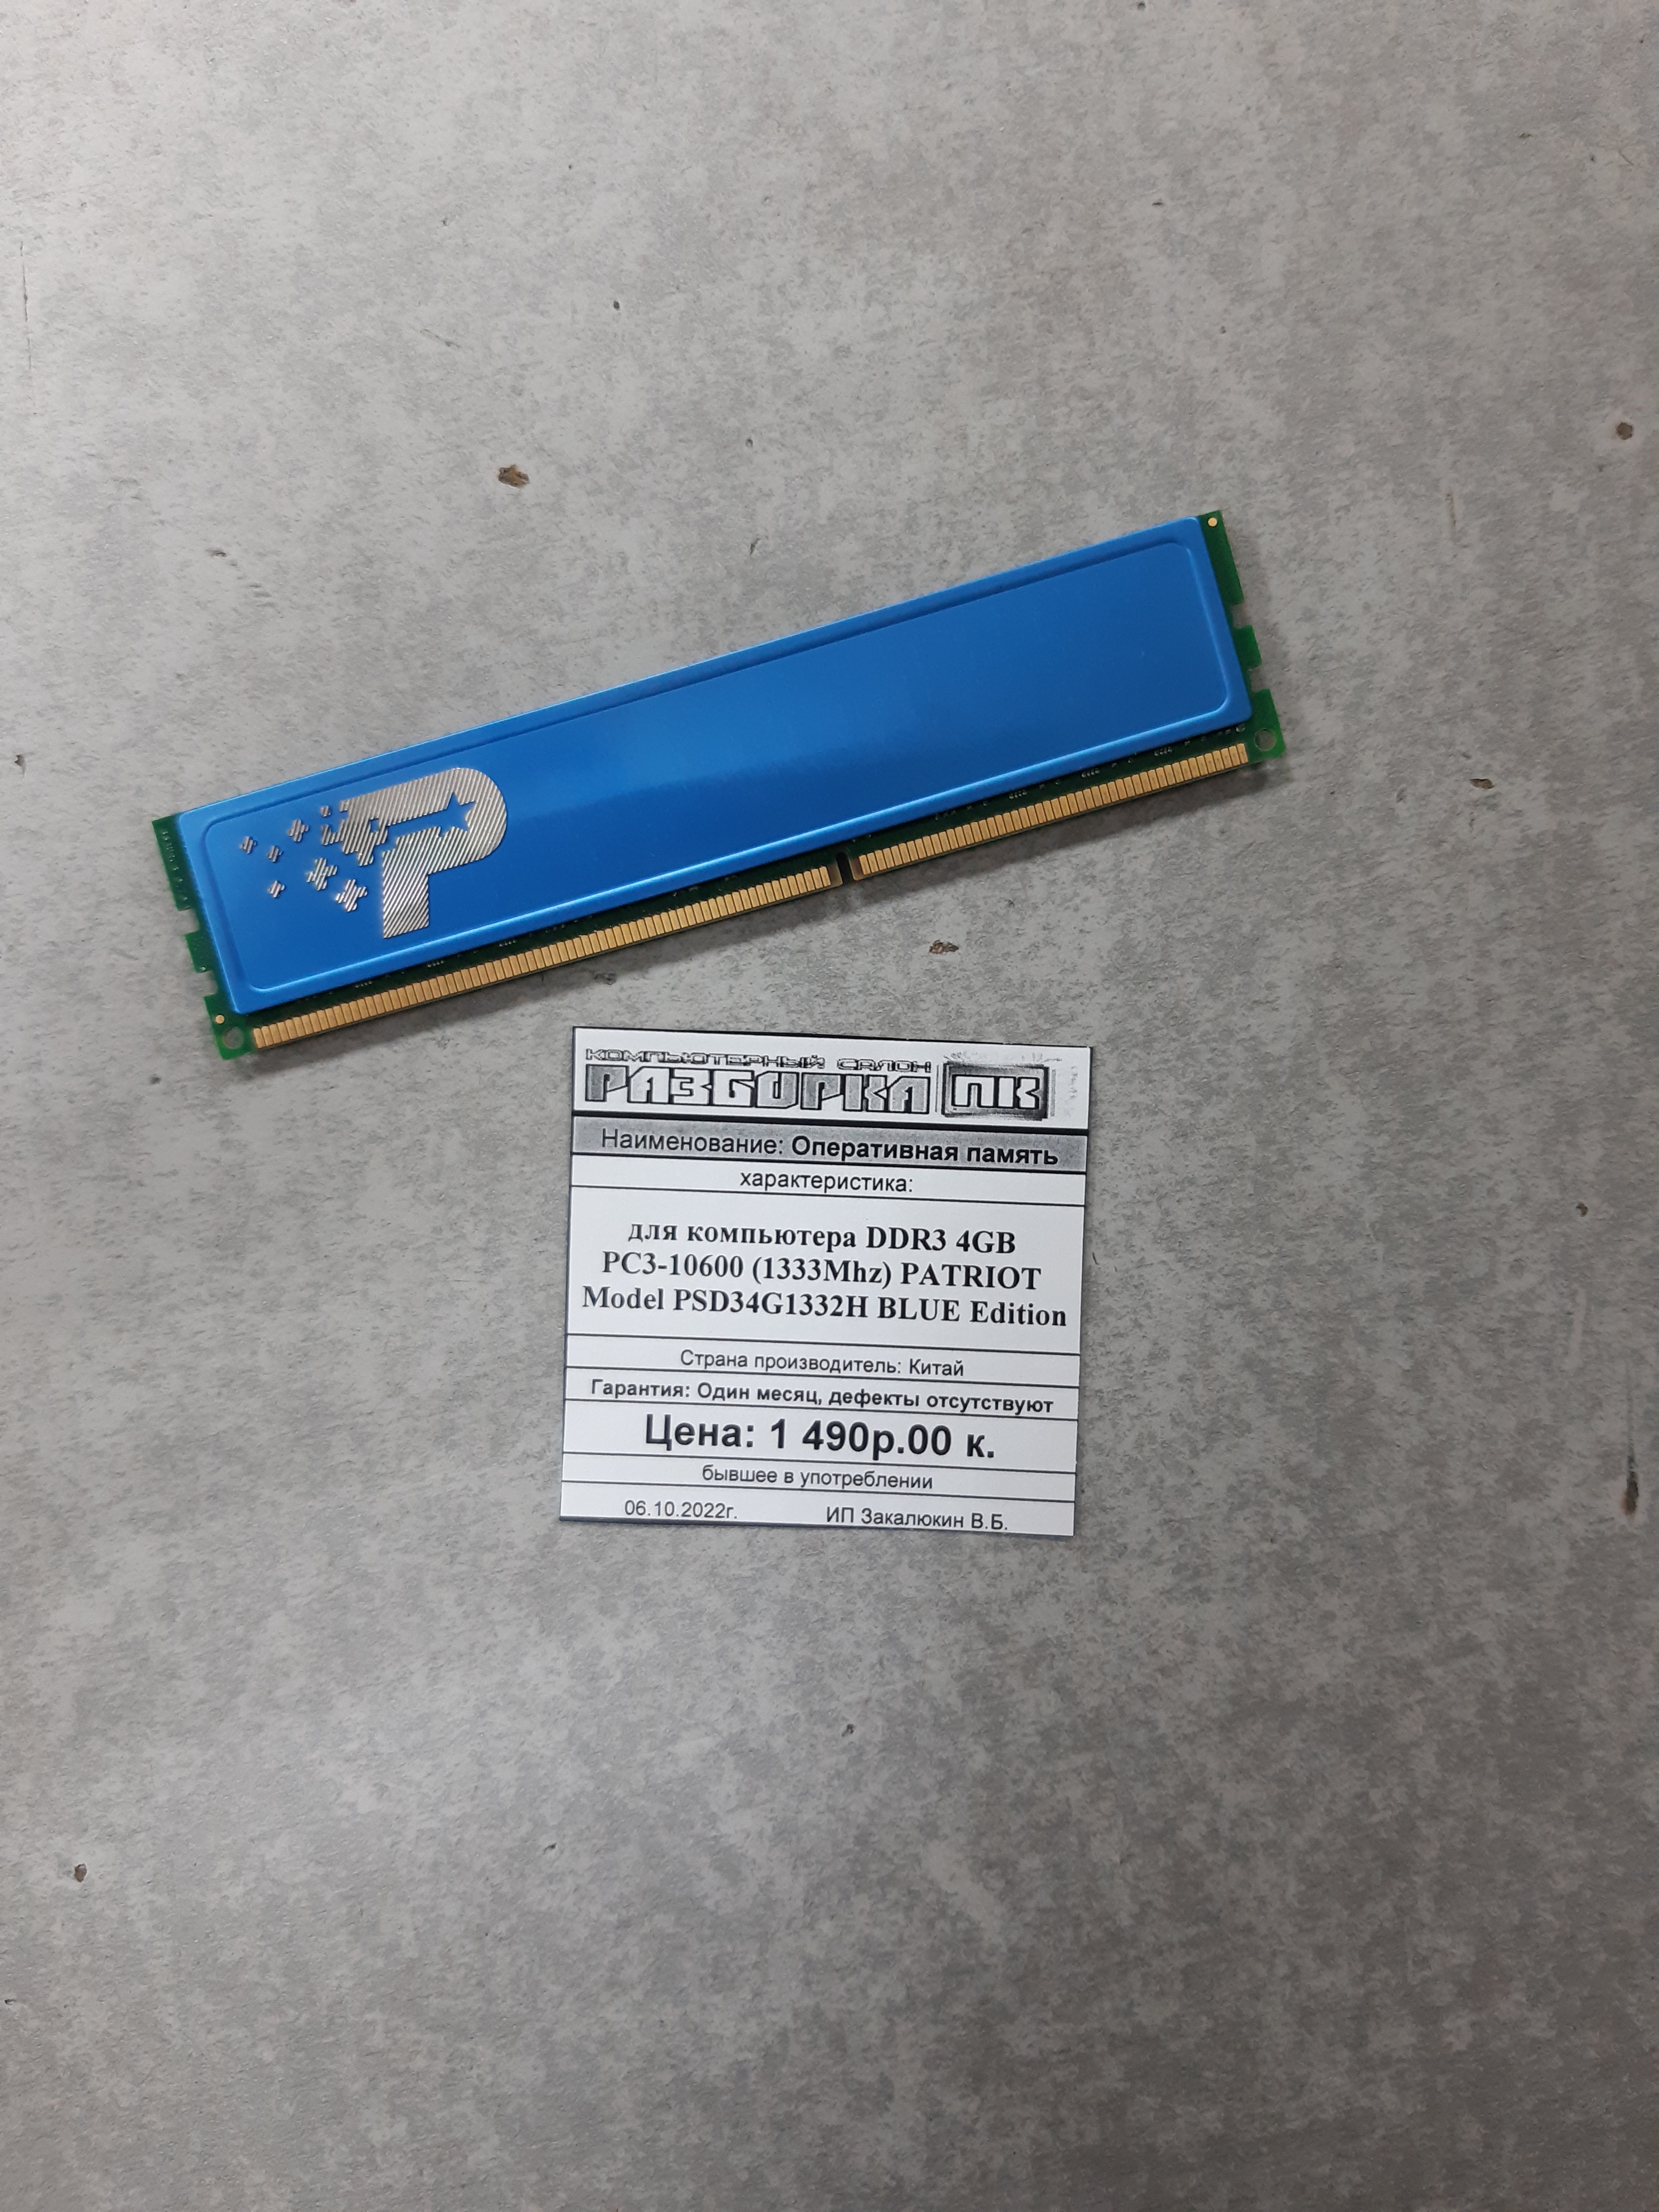 Оперативная память DIMM DDR3 4GB (1333Mhz) PATRIOT